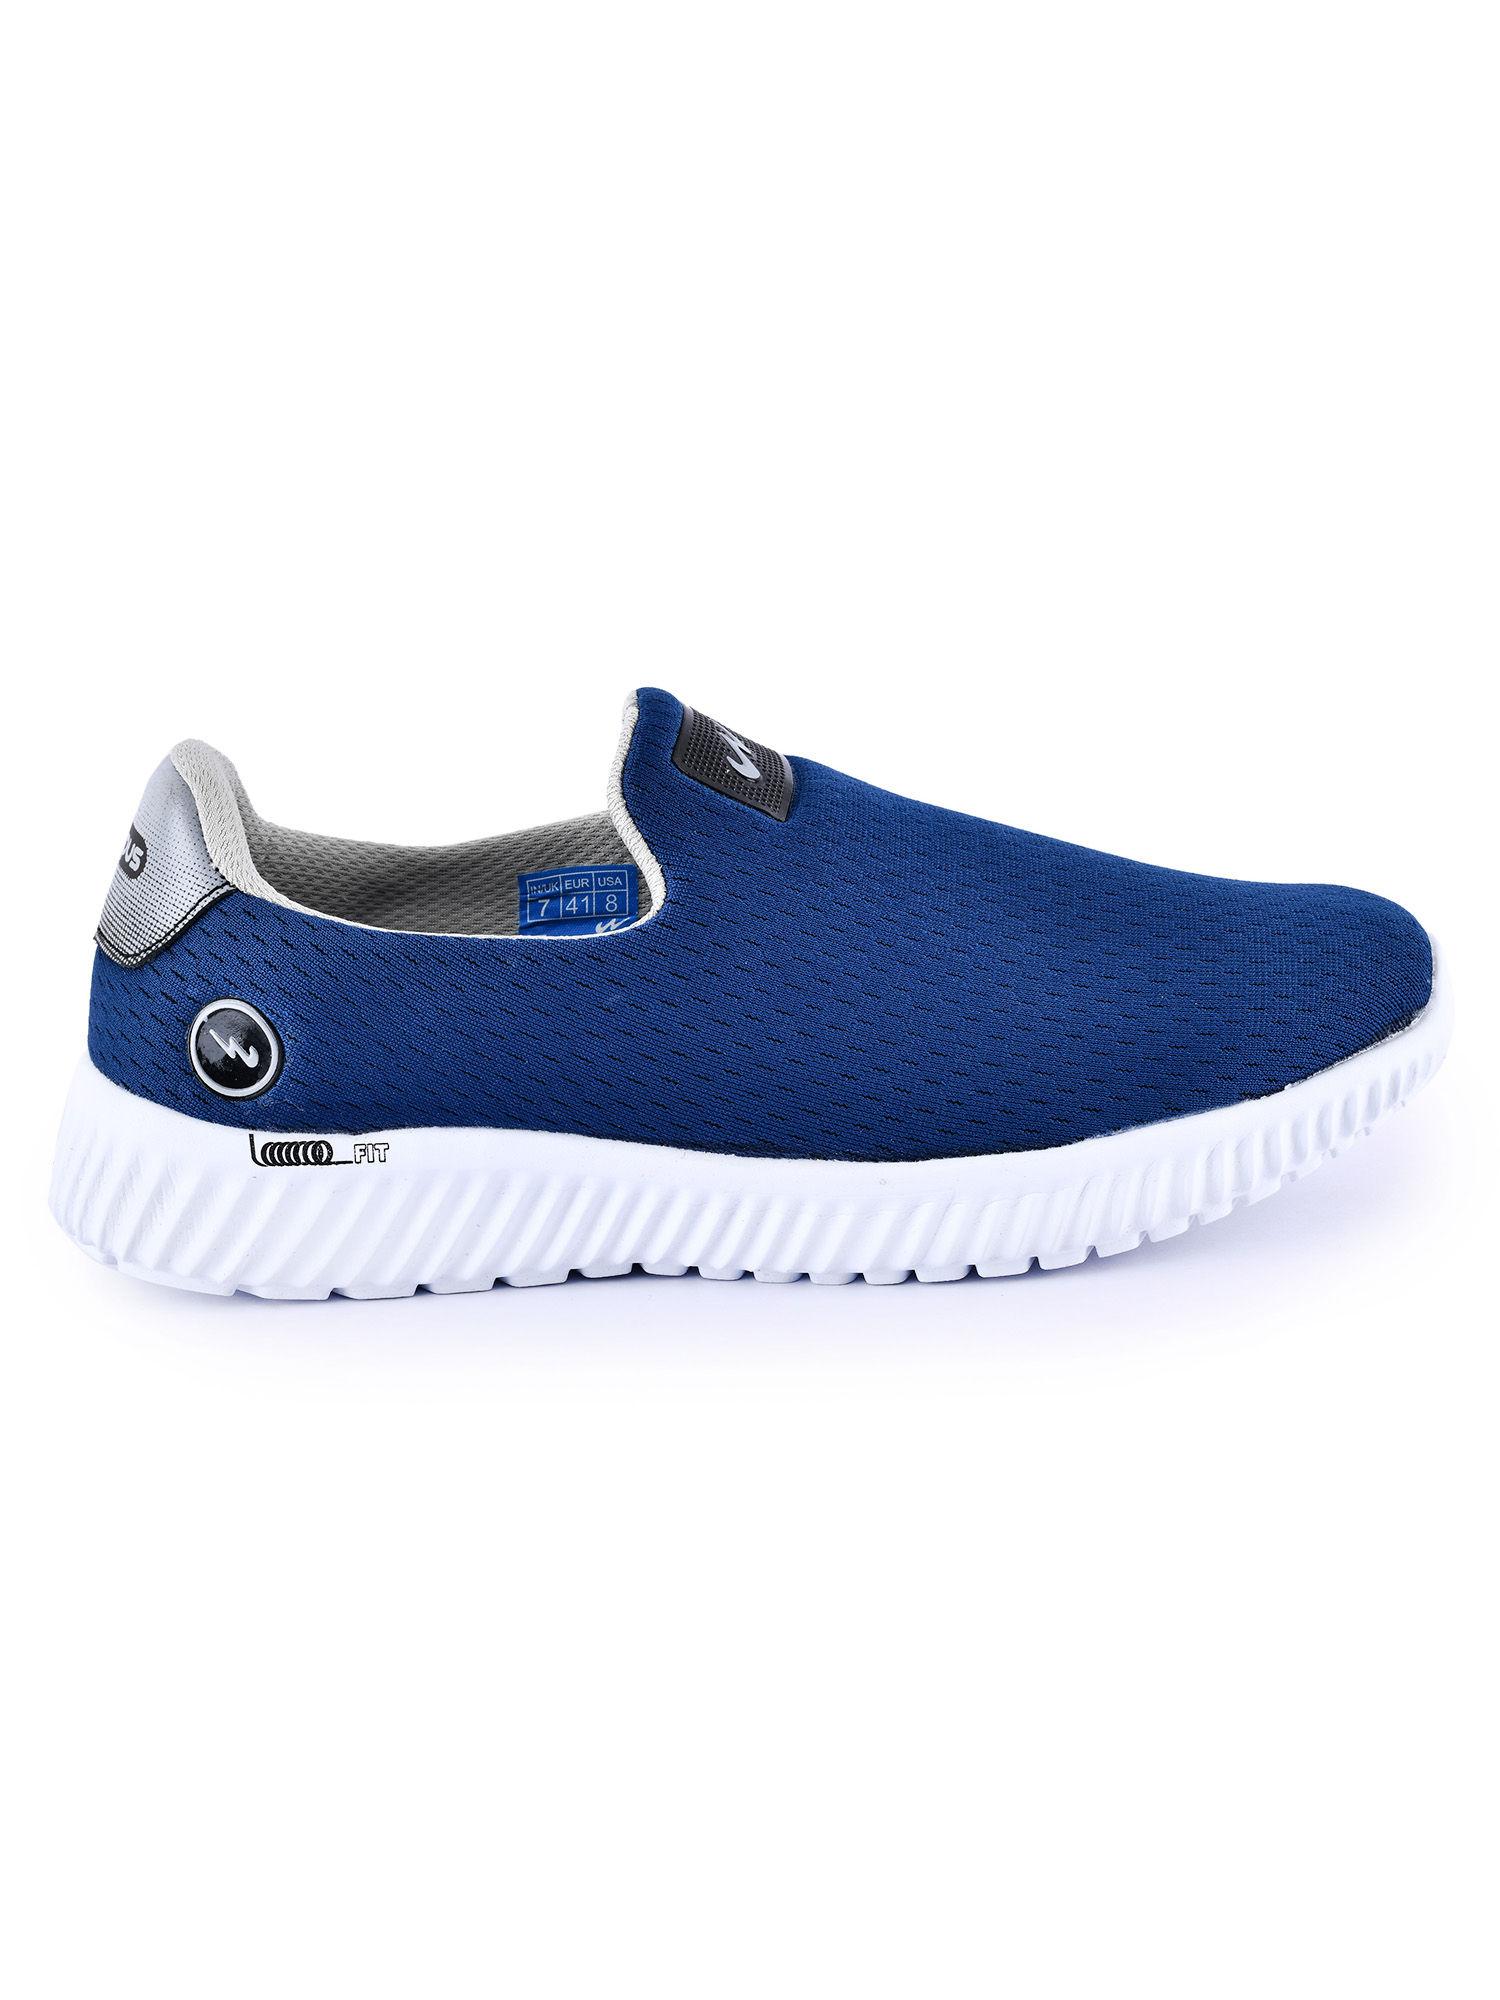 oxyfit blue casual shoes for men